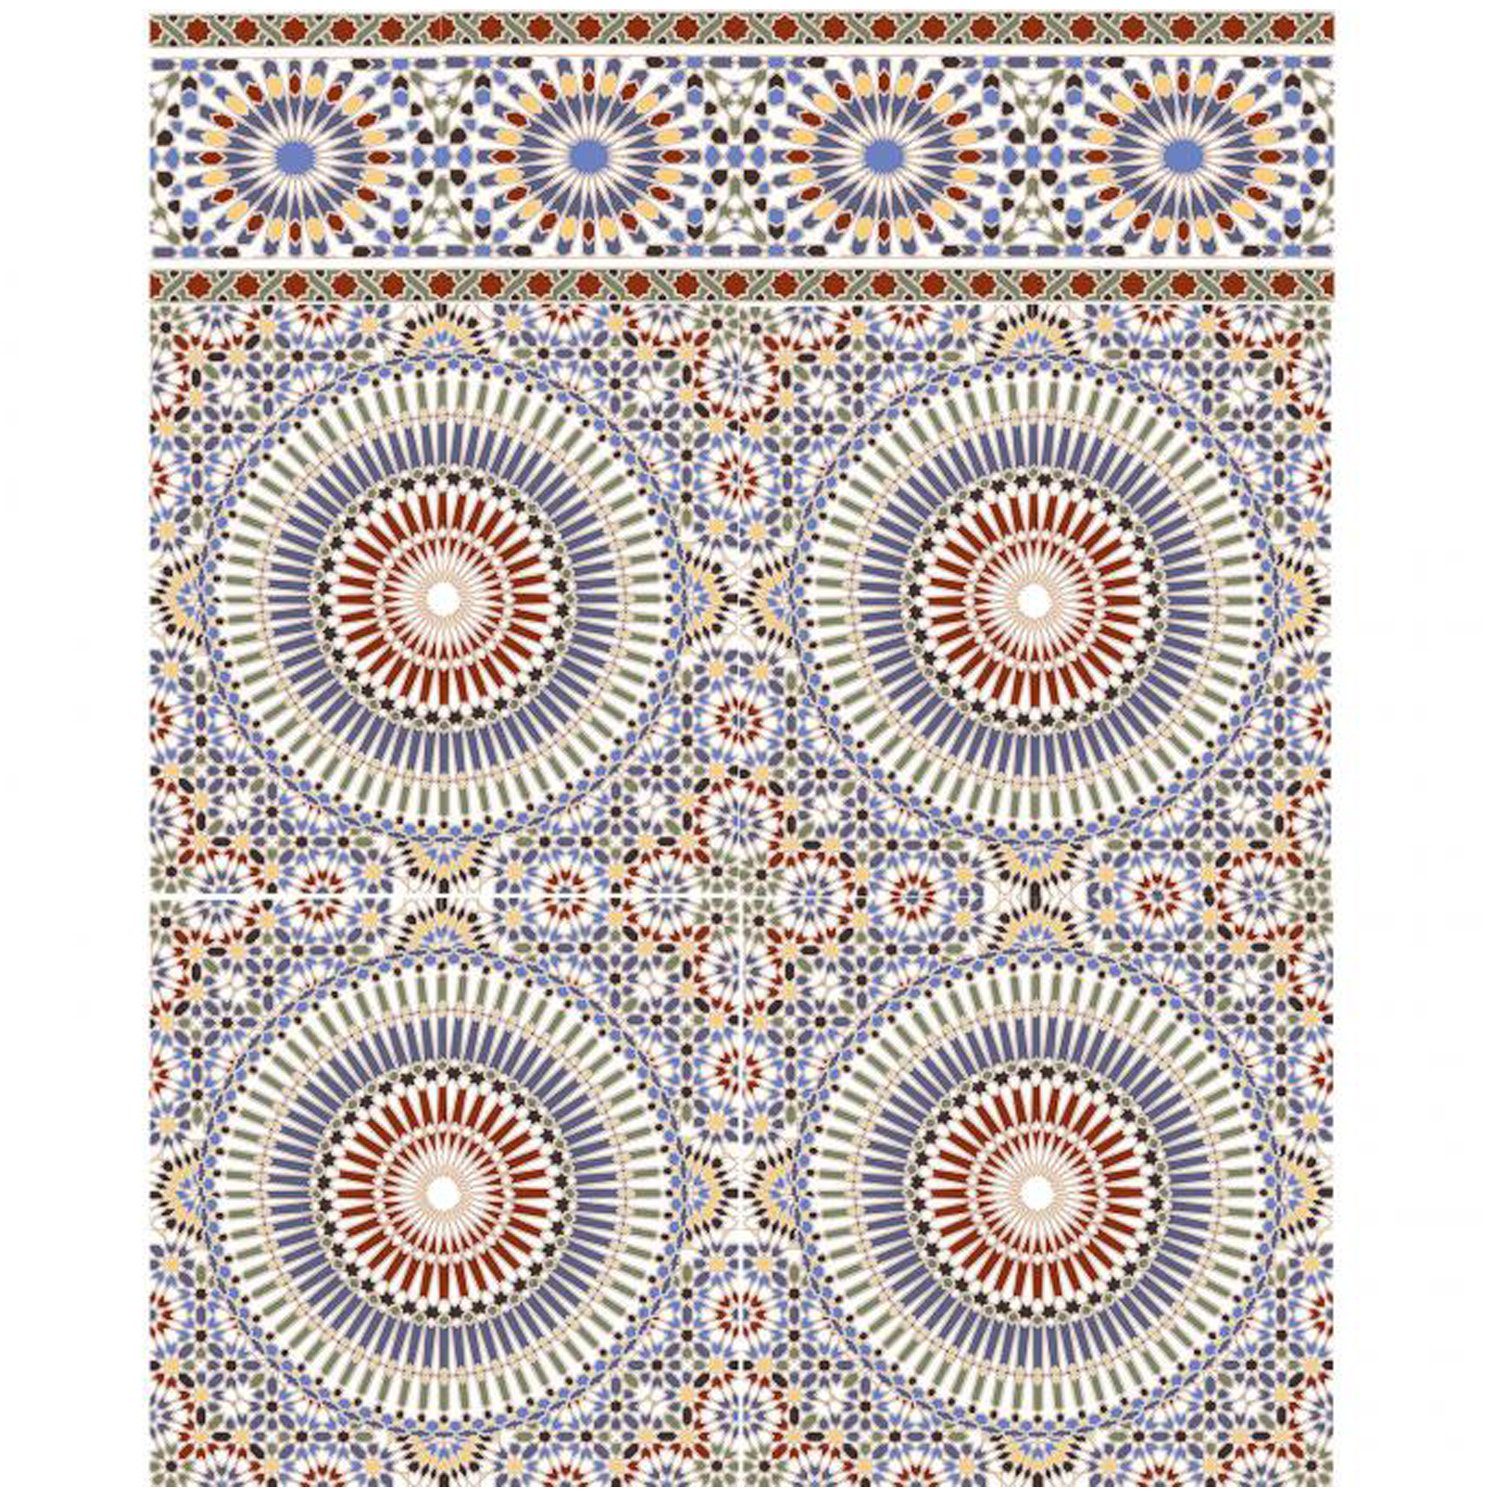 Casa Moro Wandfliese Marokkanische Wand-Fliesen Tanger 20x20 cm bunt mit Mosaik-Muster, Orientalische Wandfliesen für Küche Badezimmer Flur Küchenrückwand (1 Quadratmeter), FL16011, Mehrfarbig